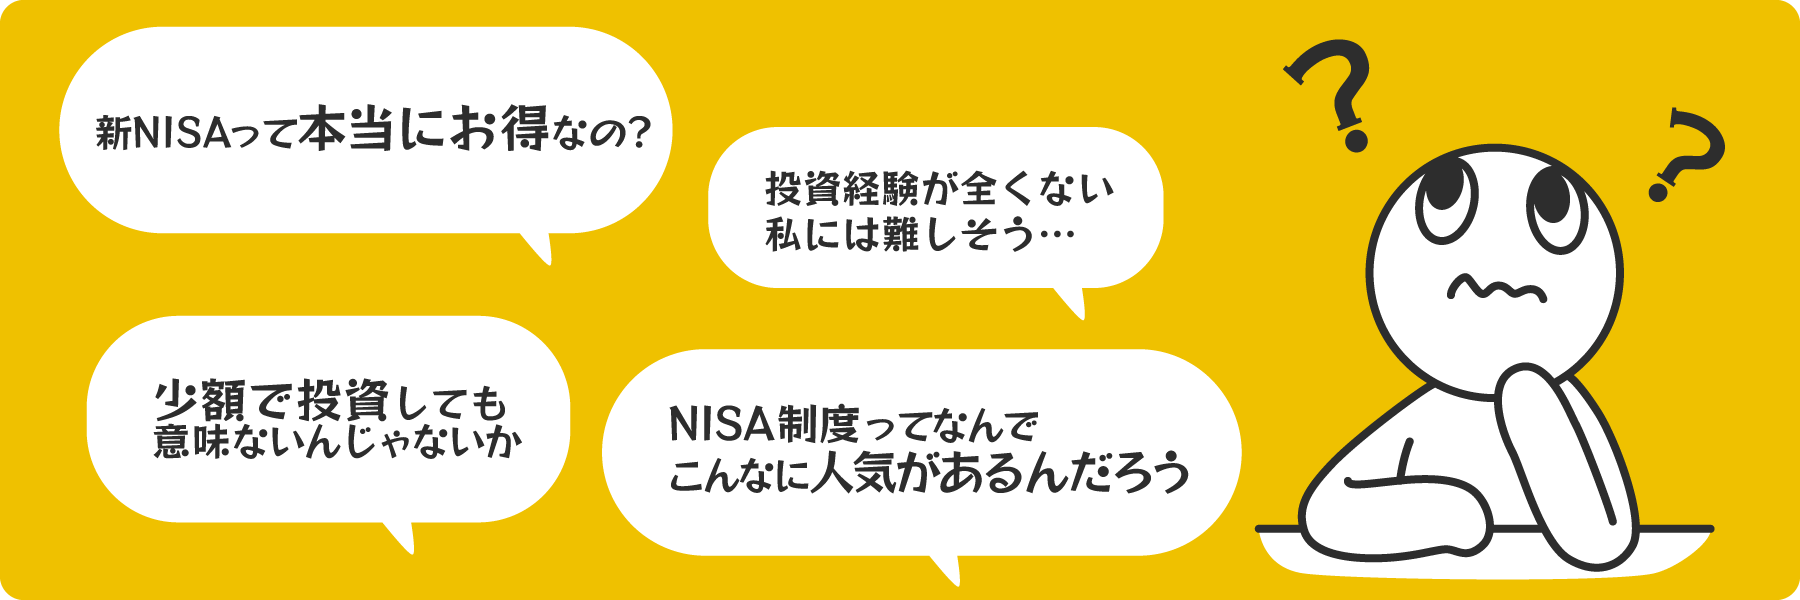 NISAについての疑問